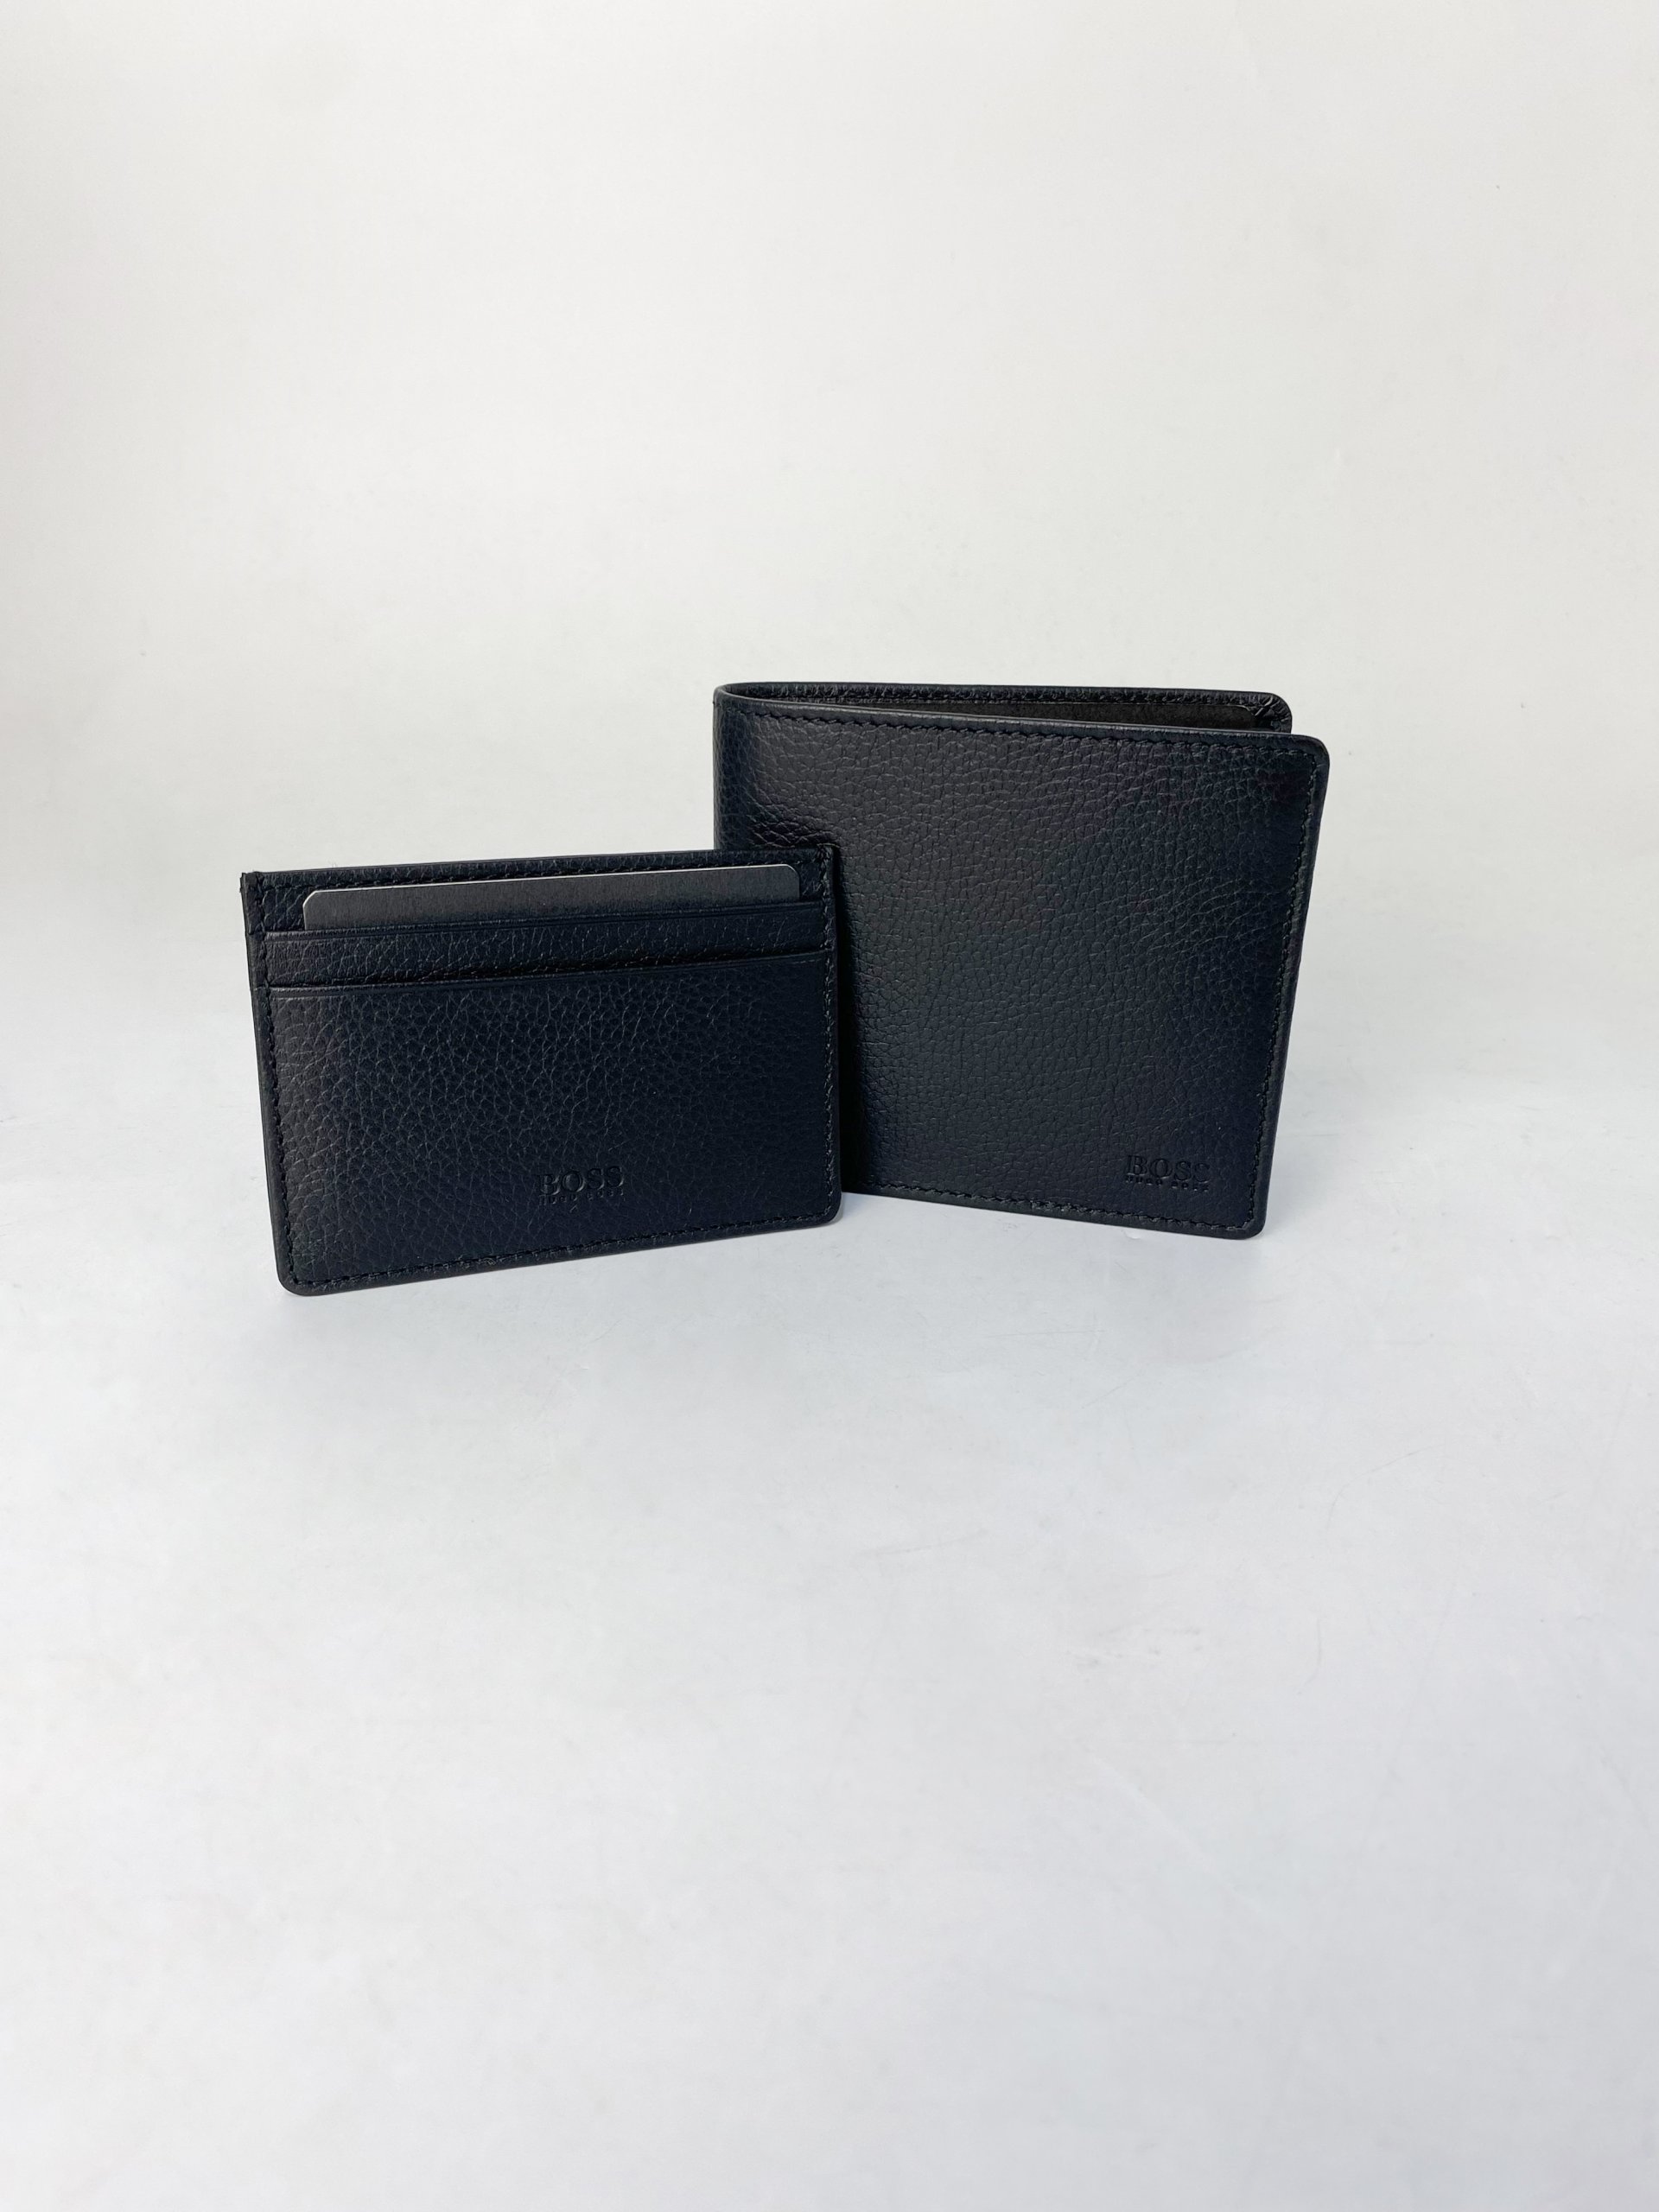 Hugo Boss Men's Bifold Wallet and Card Holder Gift Set Leather Black